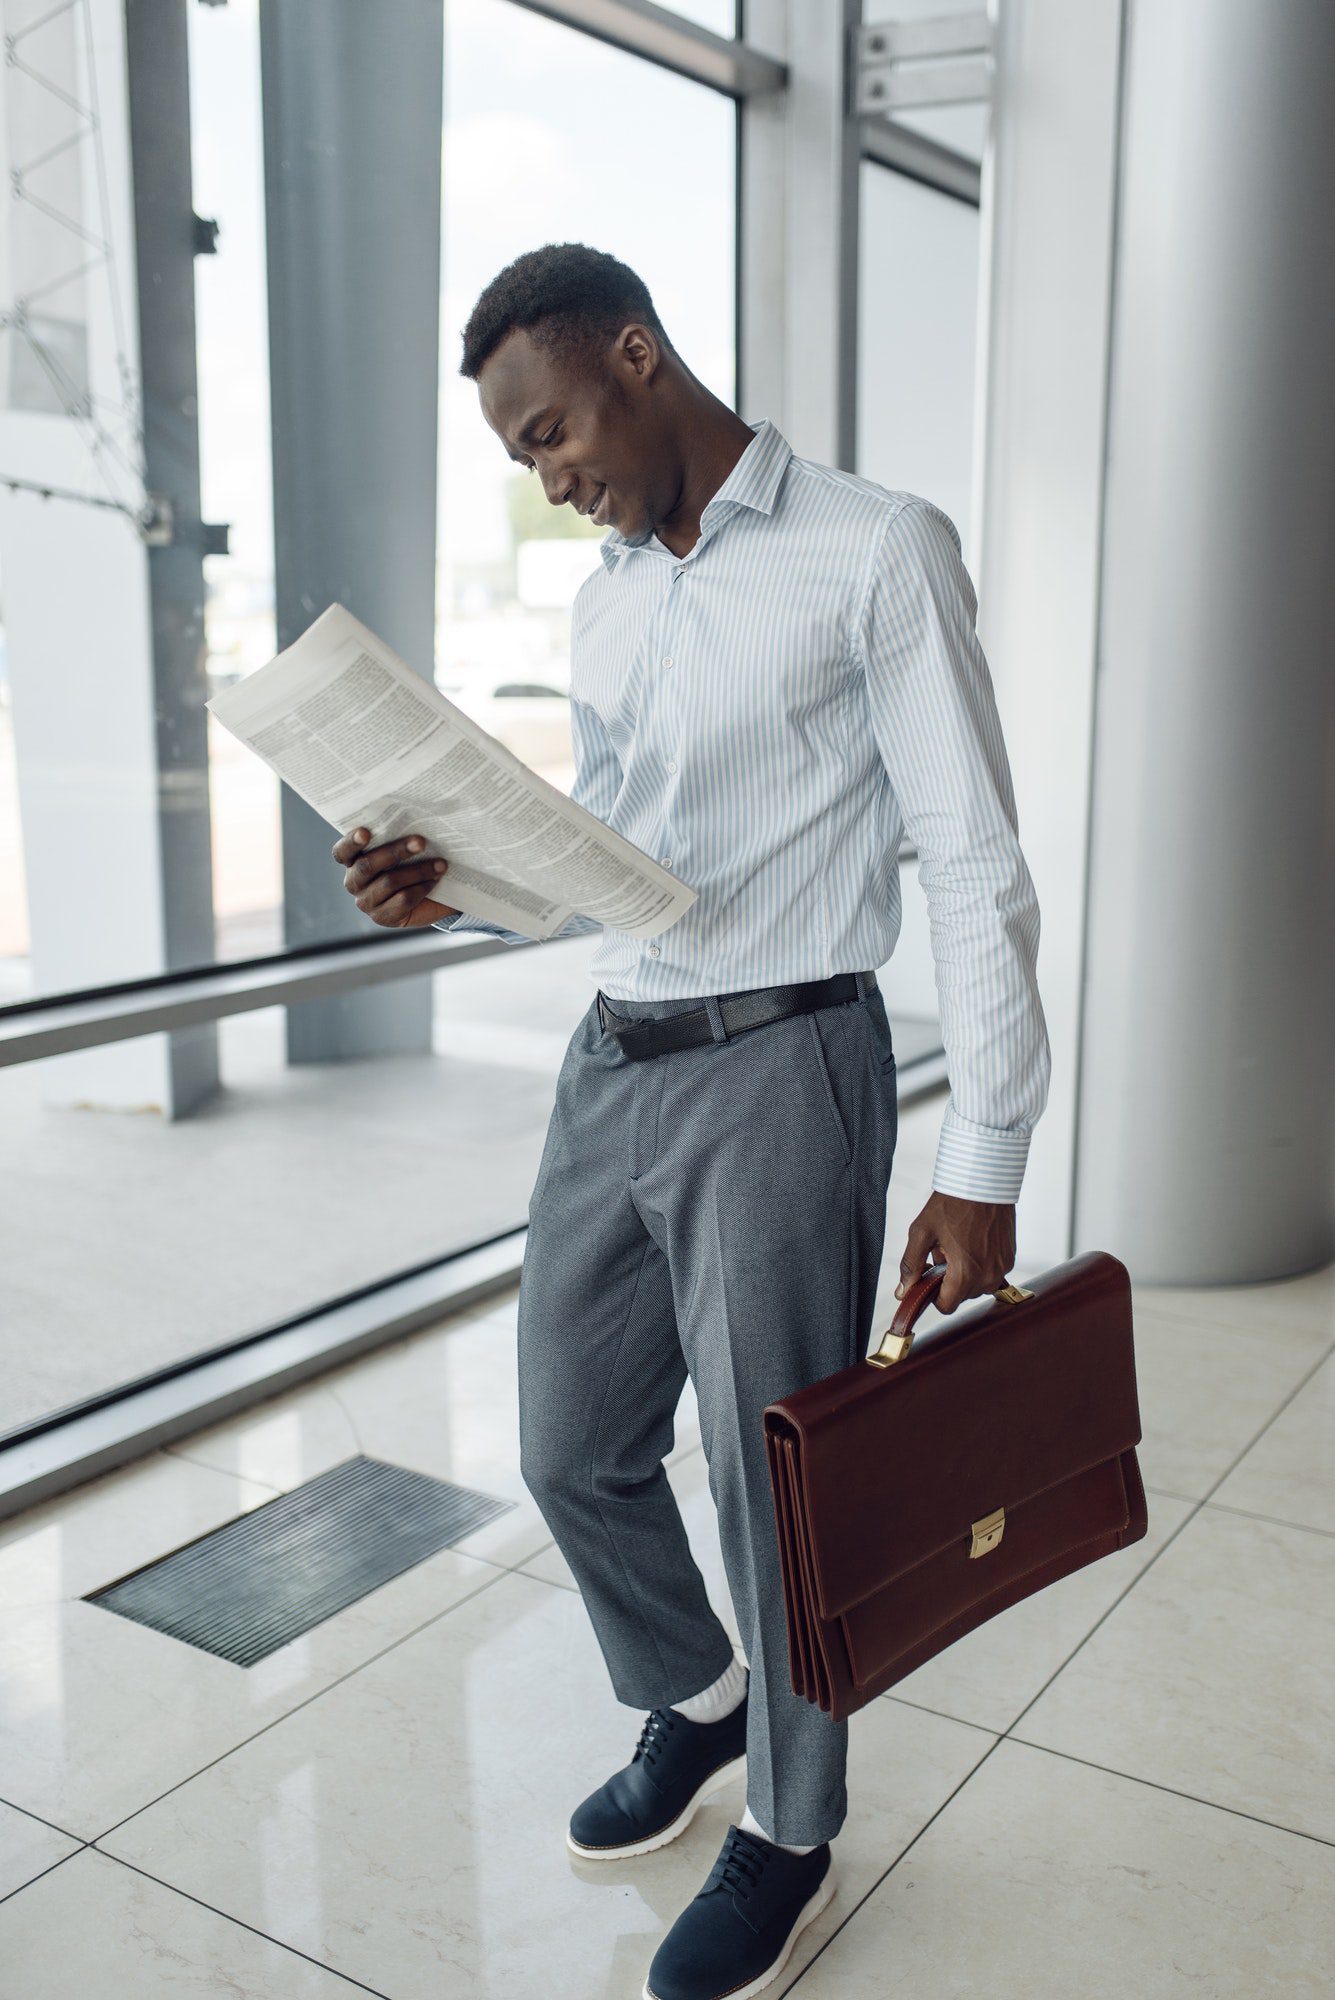 Black businessman with briefcase reading newspaper